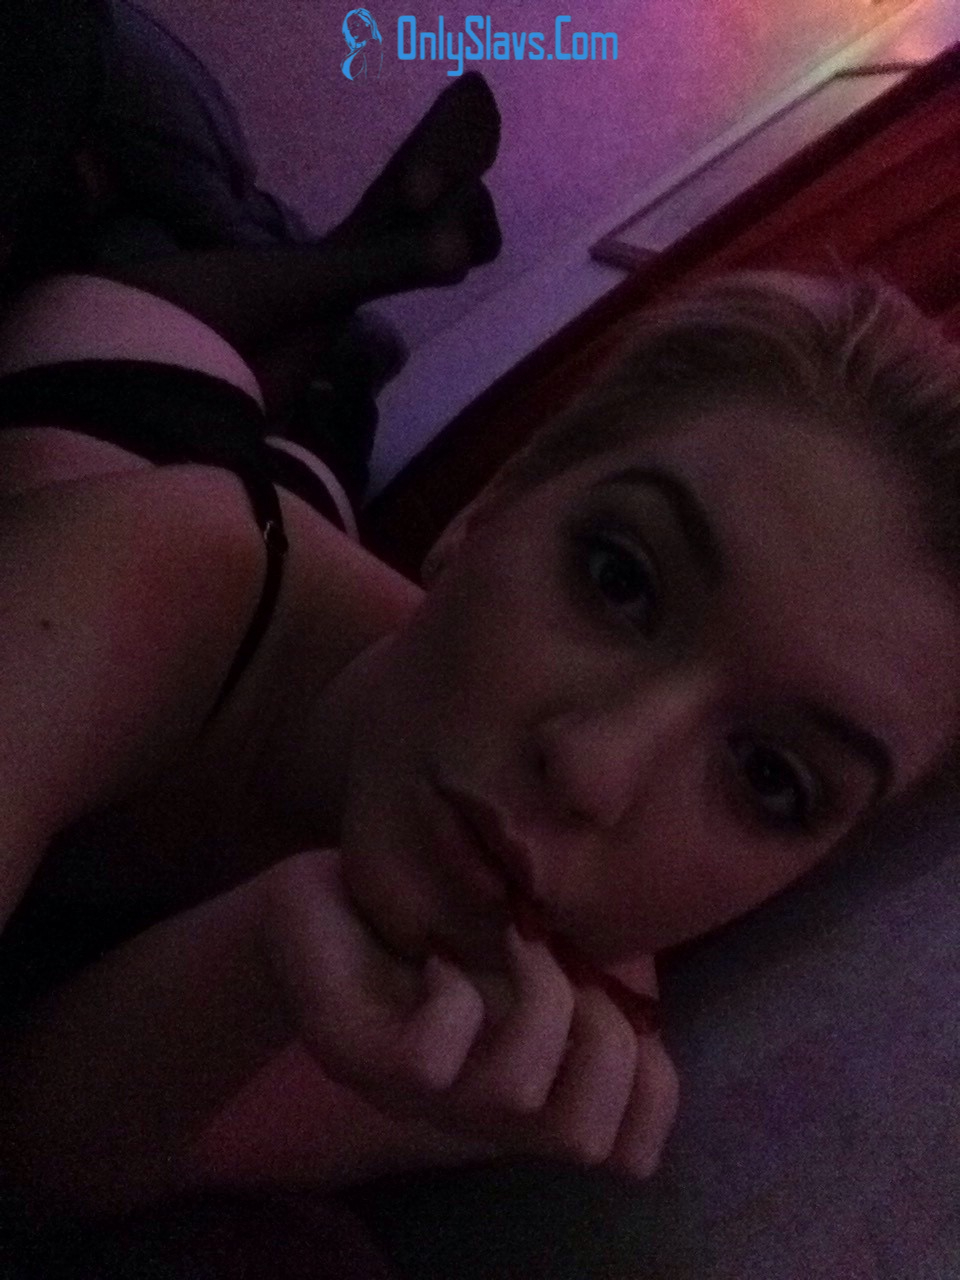 Leaked snapchat pics of nude petite Russian Slavic teen slut